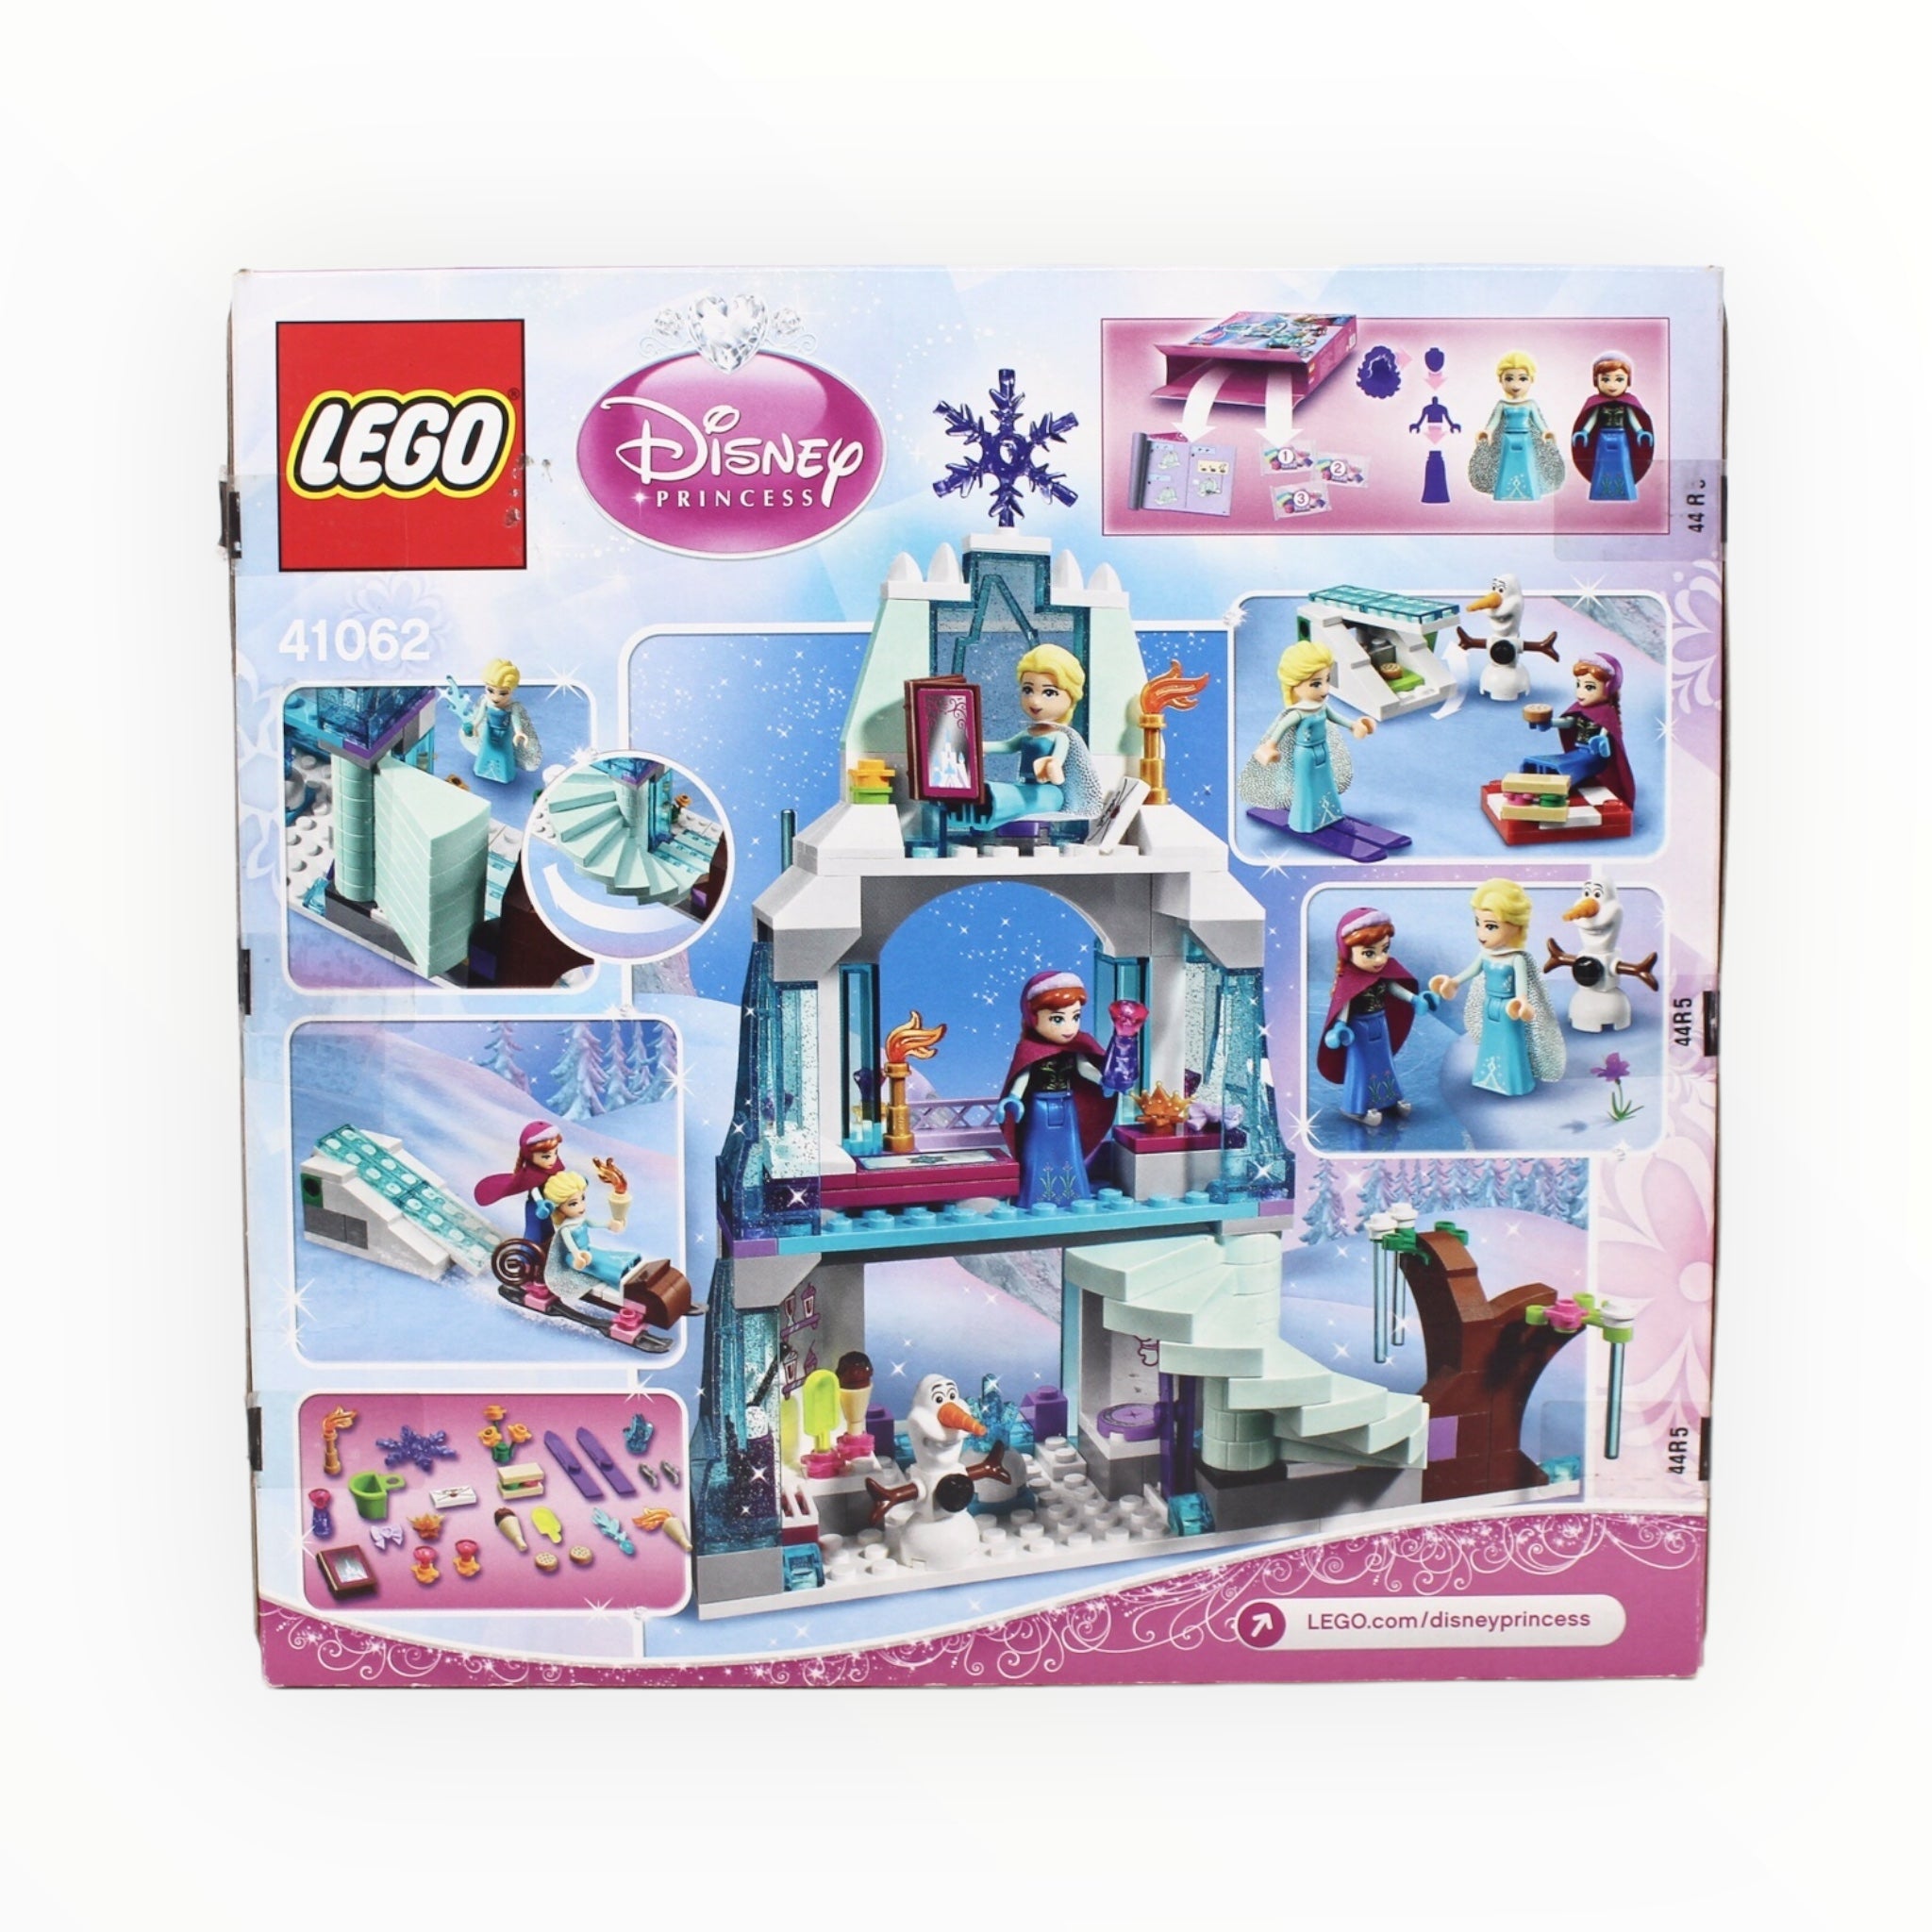 Certified Used Set 41062 Disney Princess Elsa’s Sparkling Ice Castle